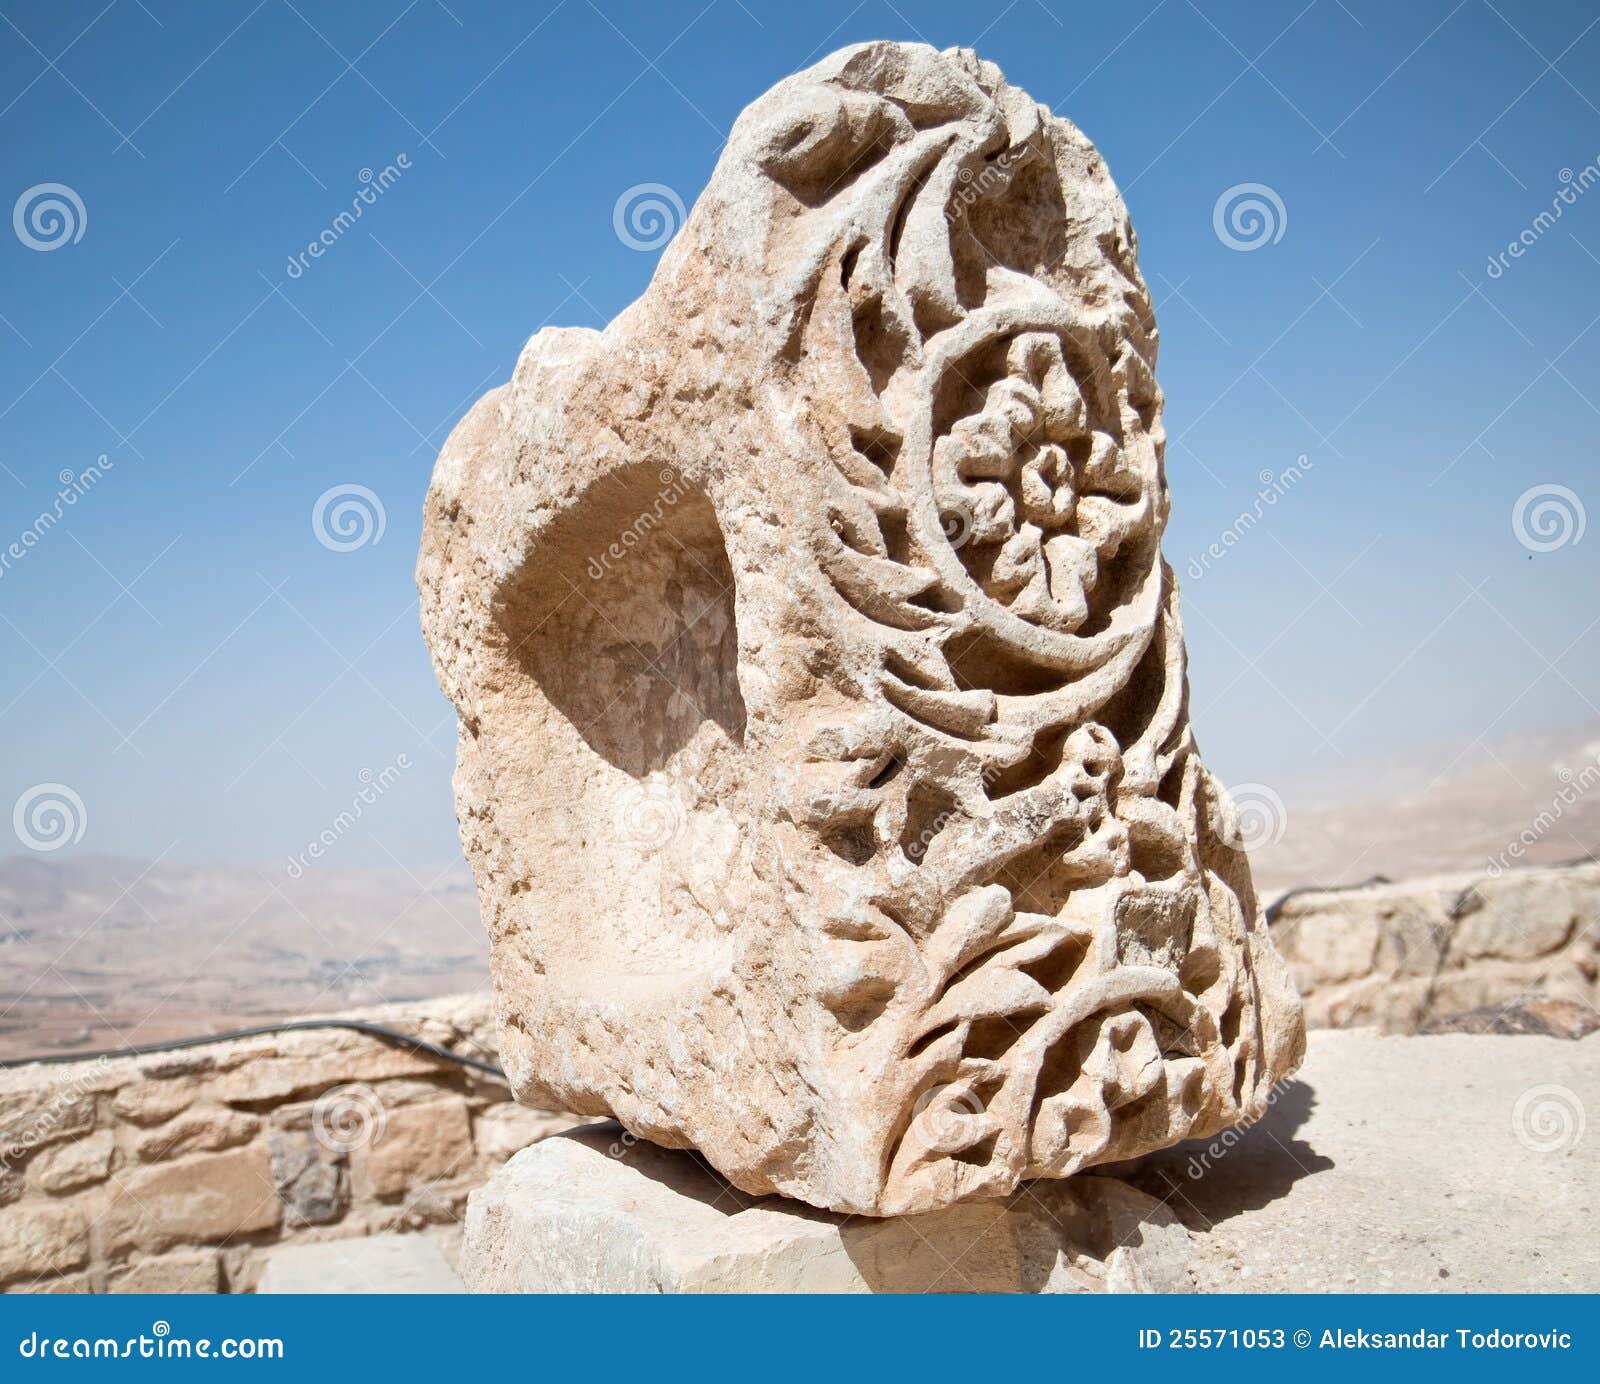 stonework details in the fortress of karak, jordan